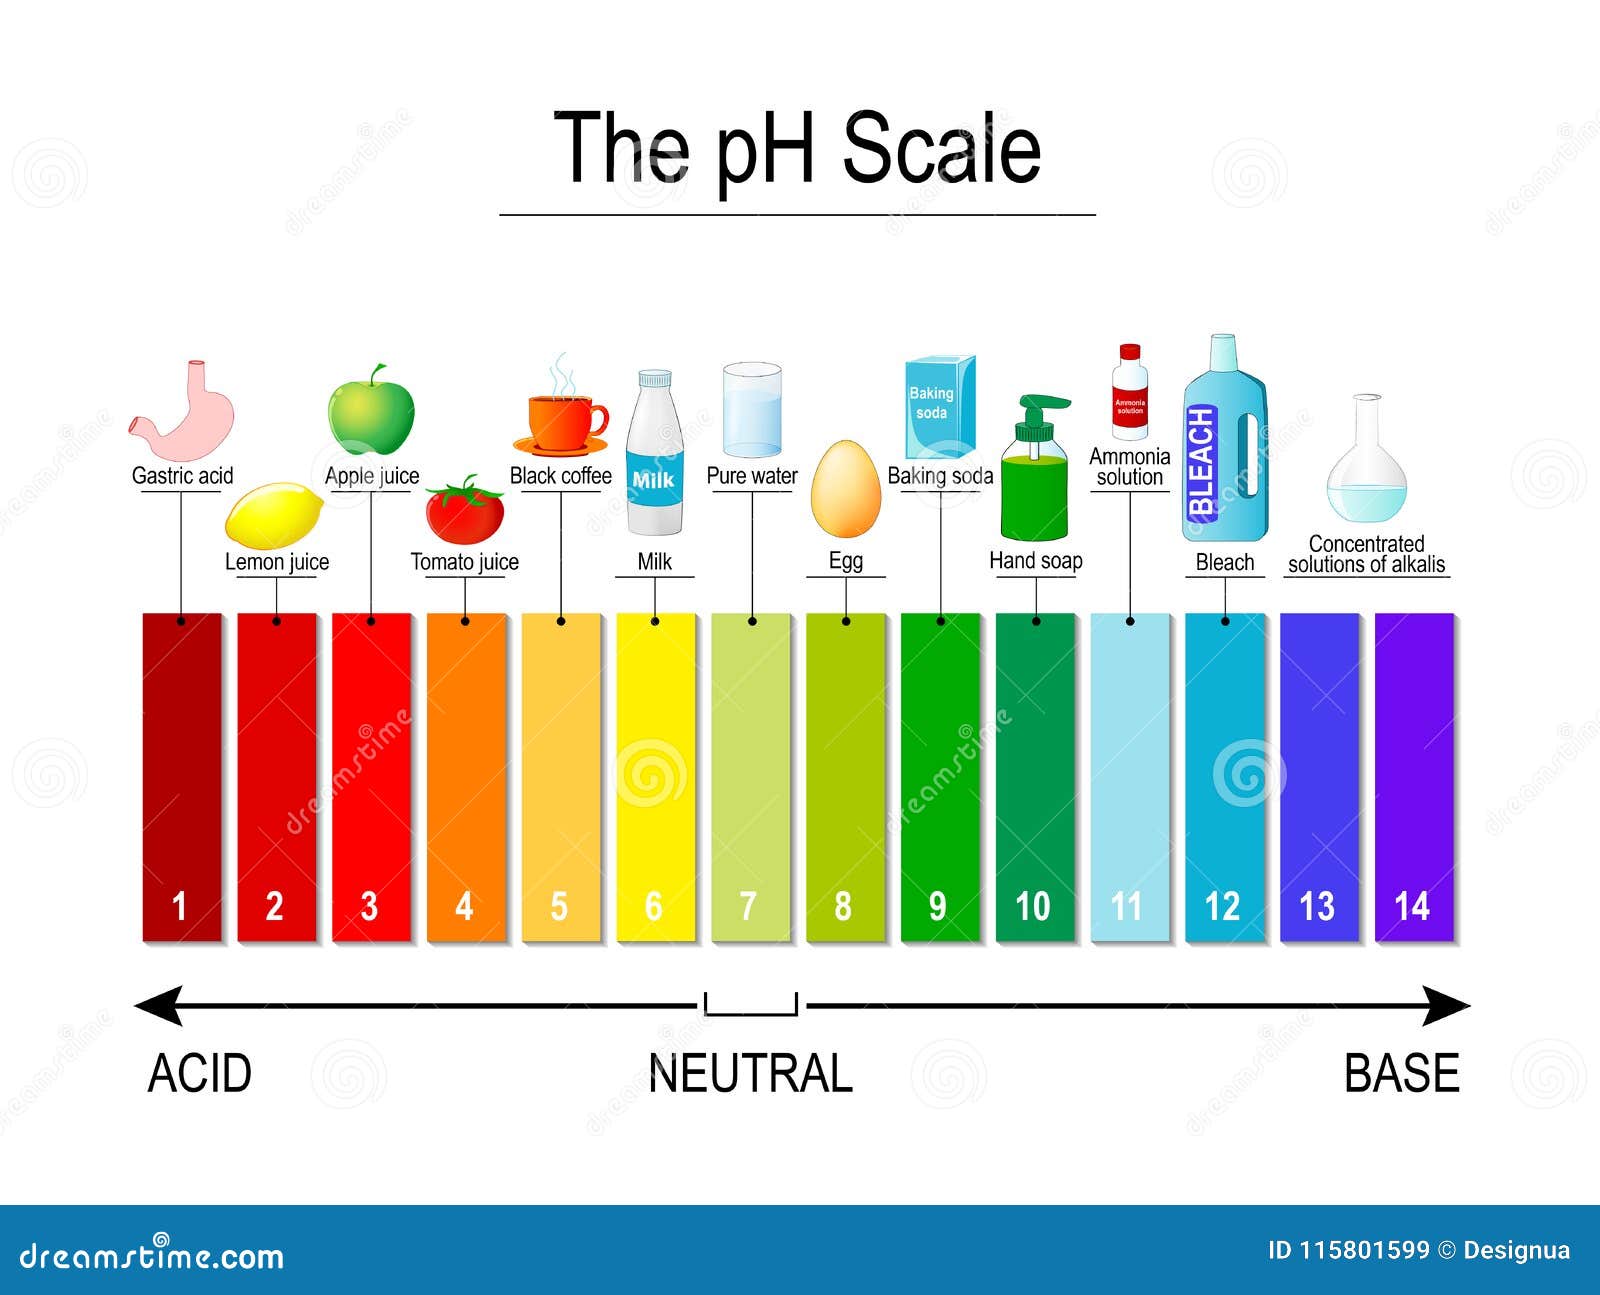 Universal Scale Chart